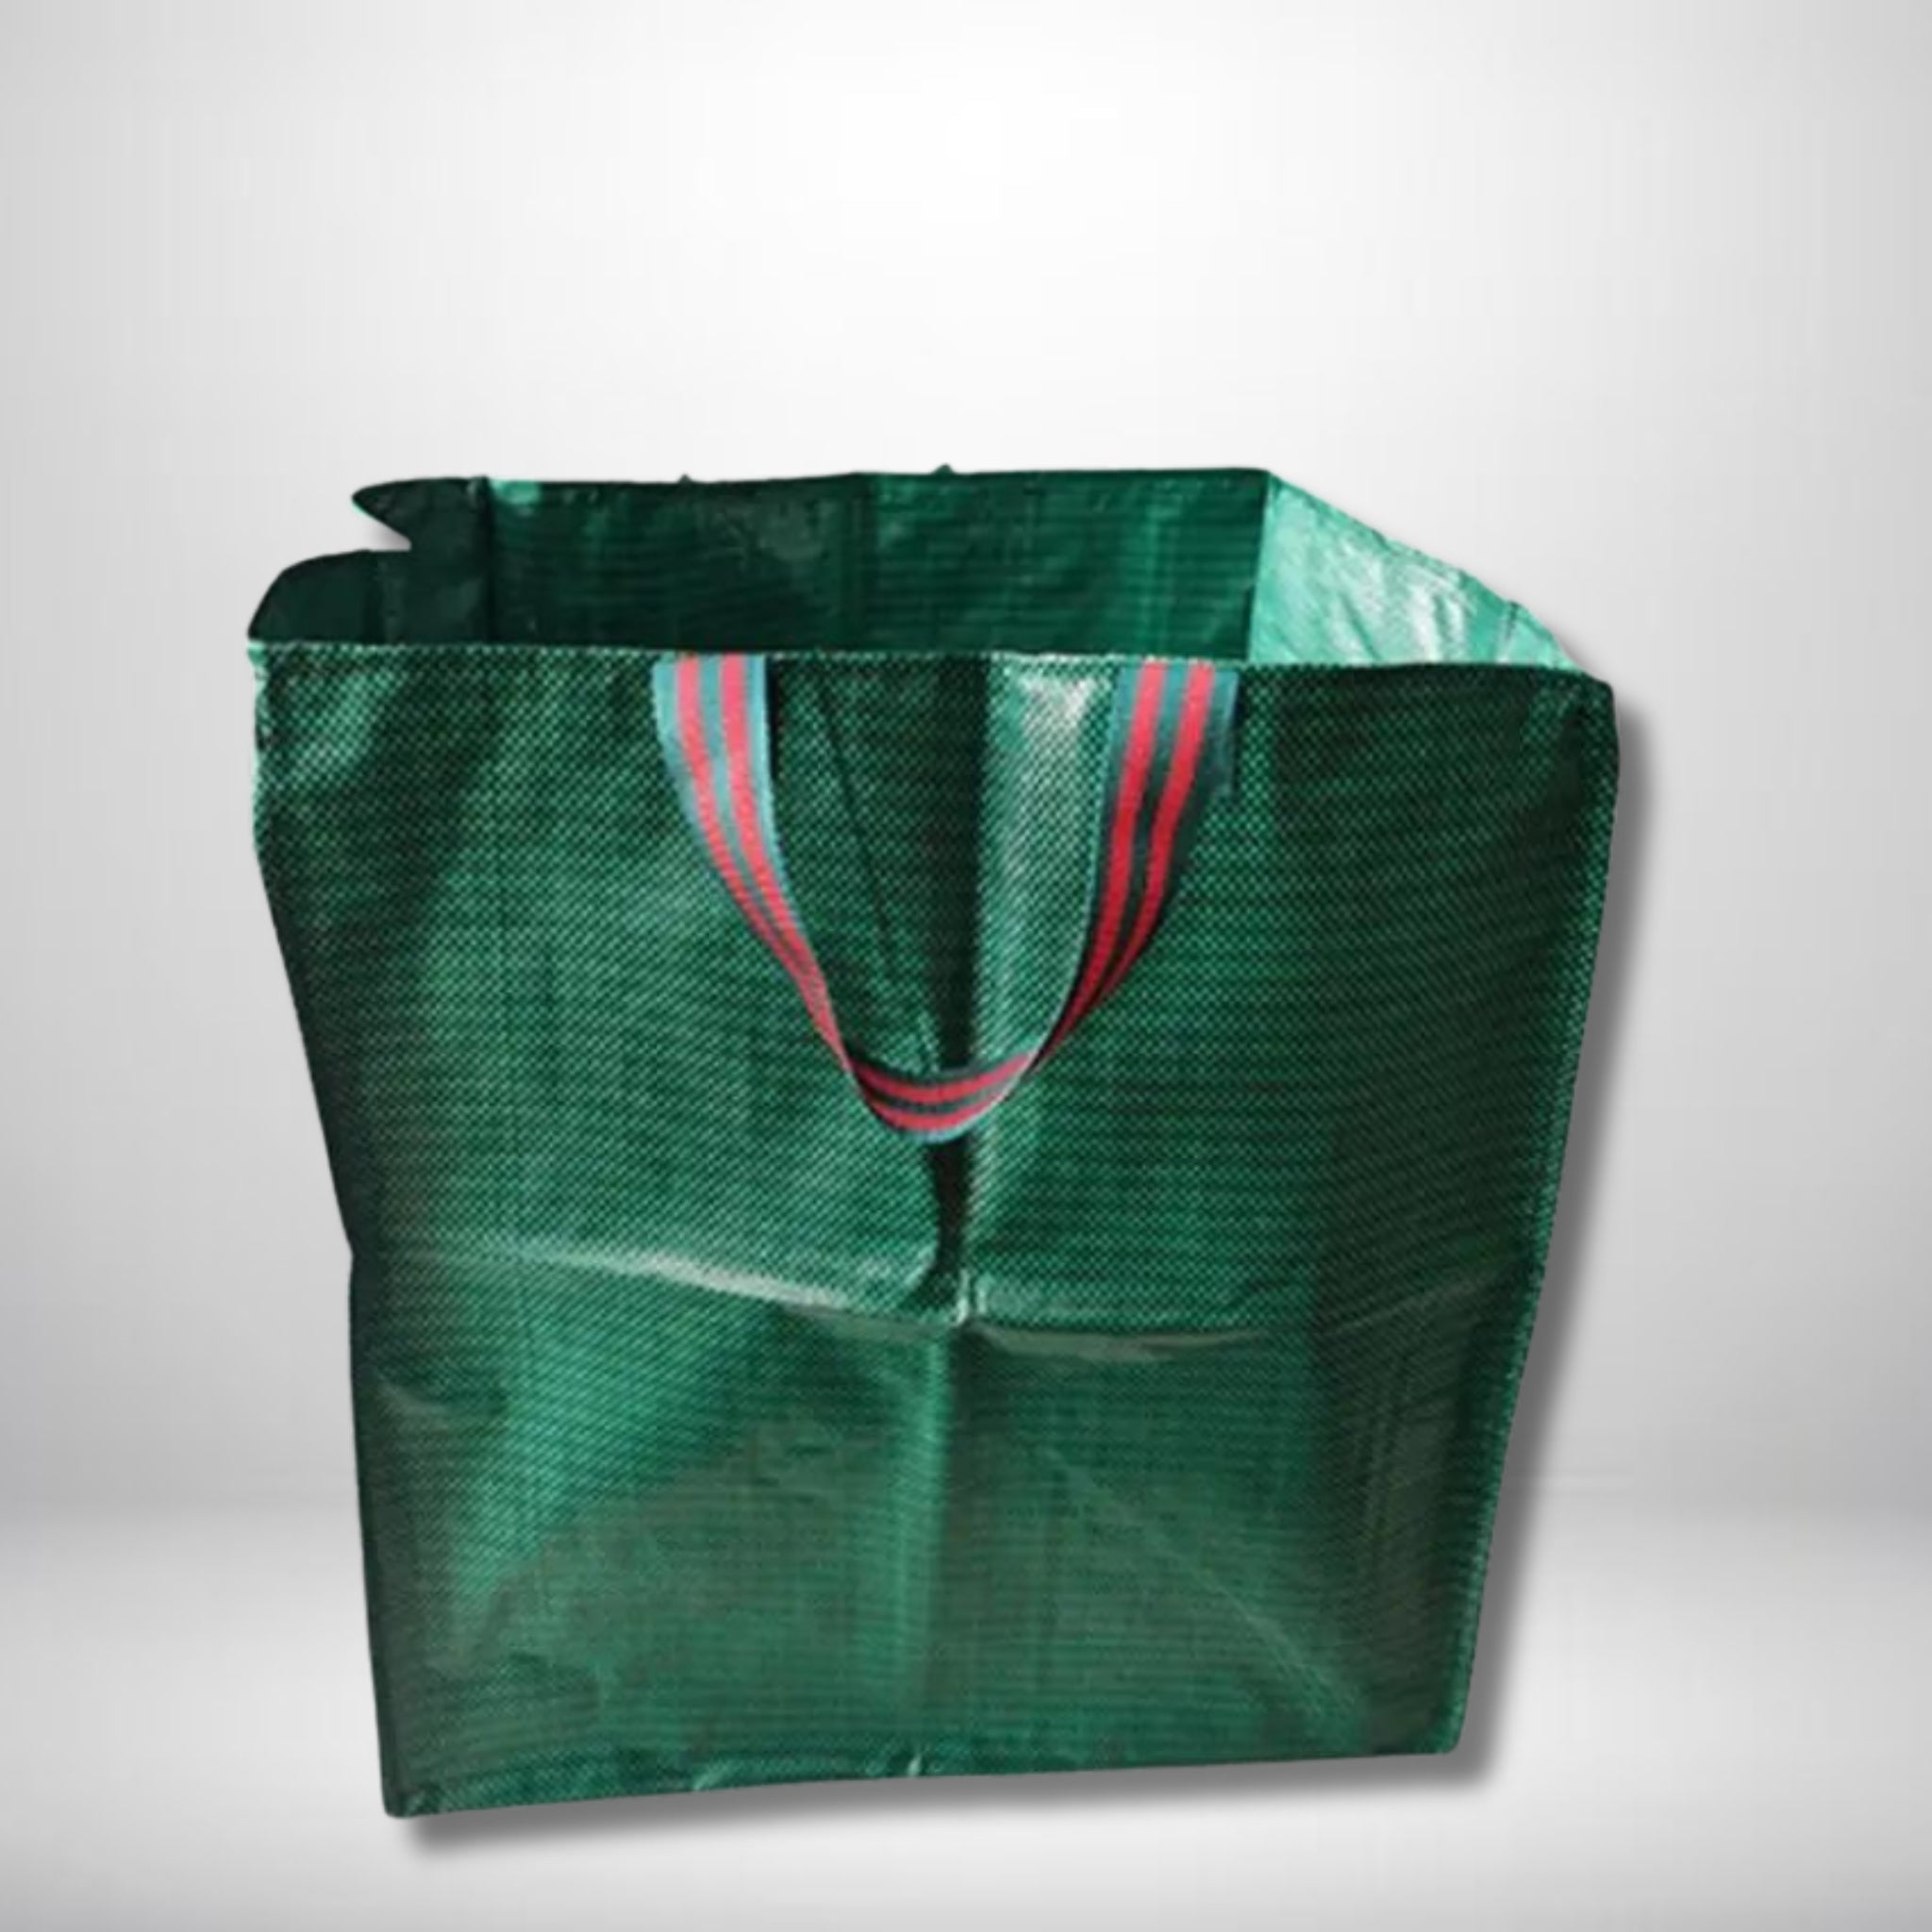 Grand sac poubelle vert GreenSet